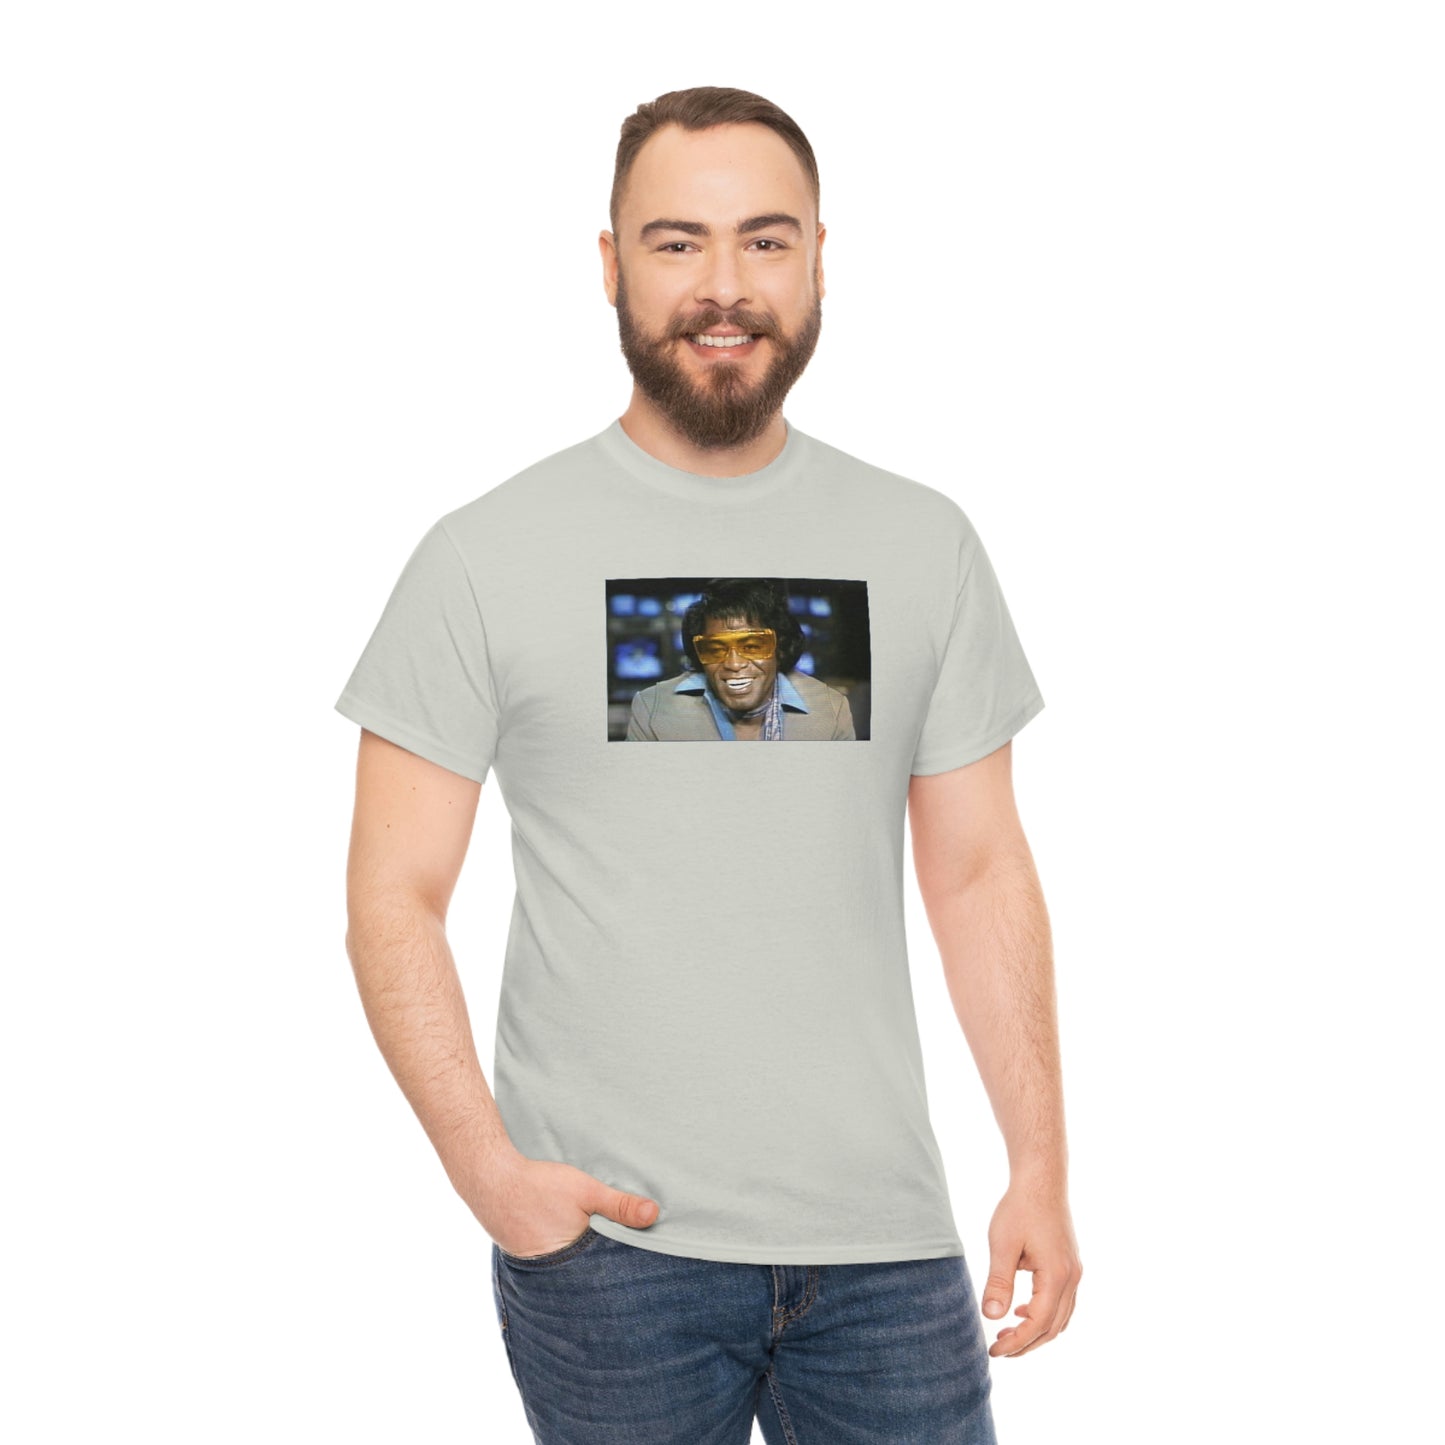 James Brown T-Shirt